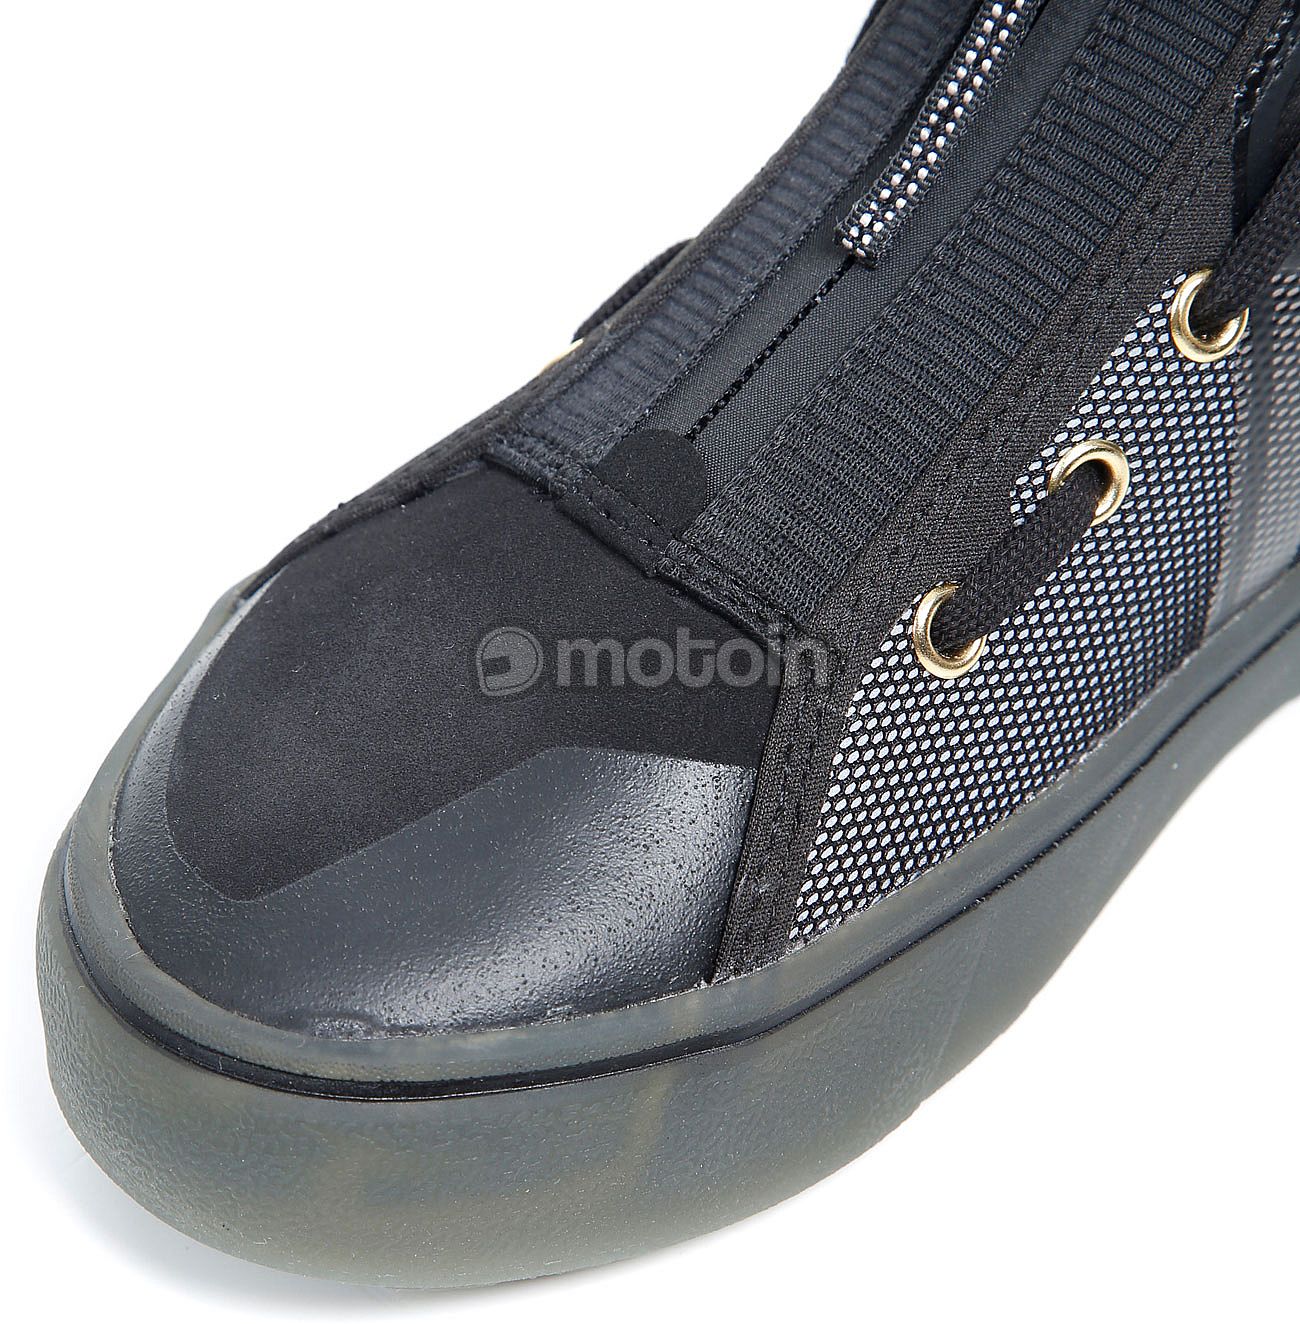 Scarpe donna Tcx Ikasu lady Wp black shoes moto